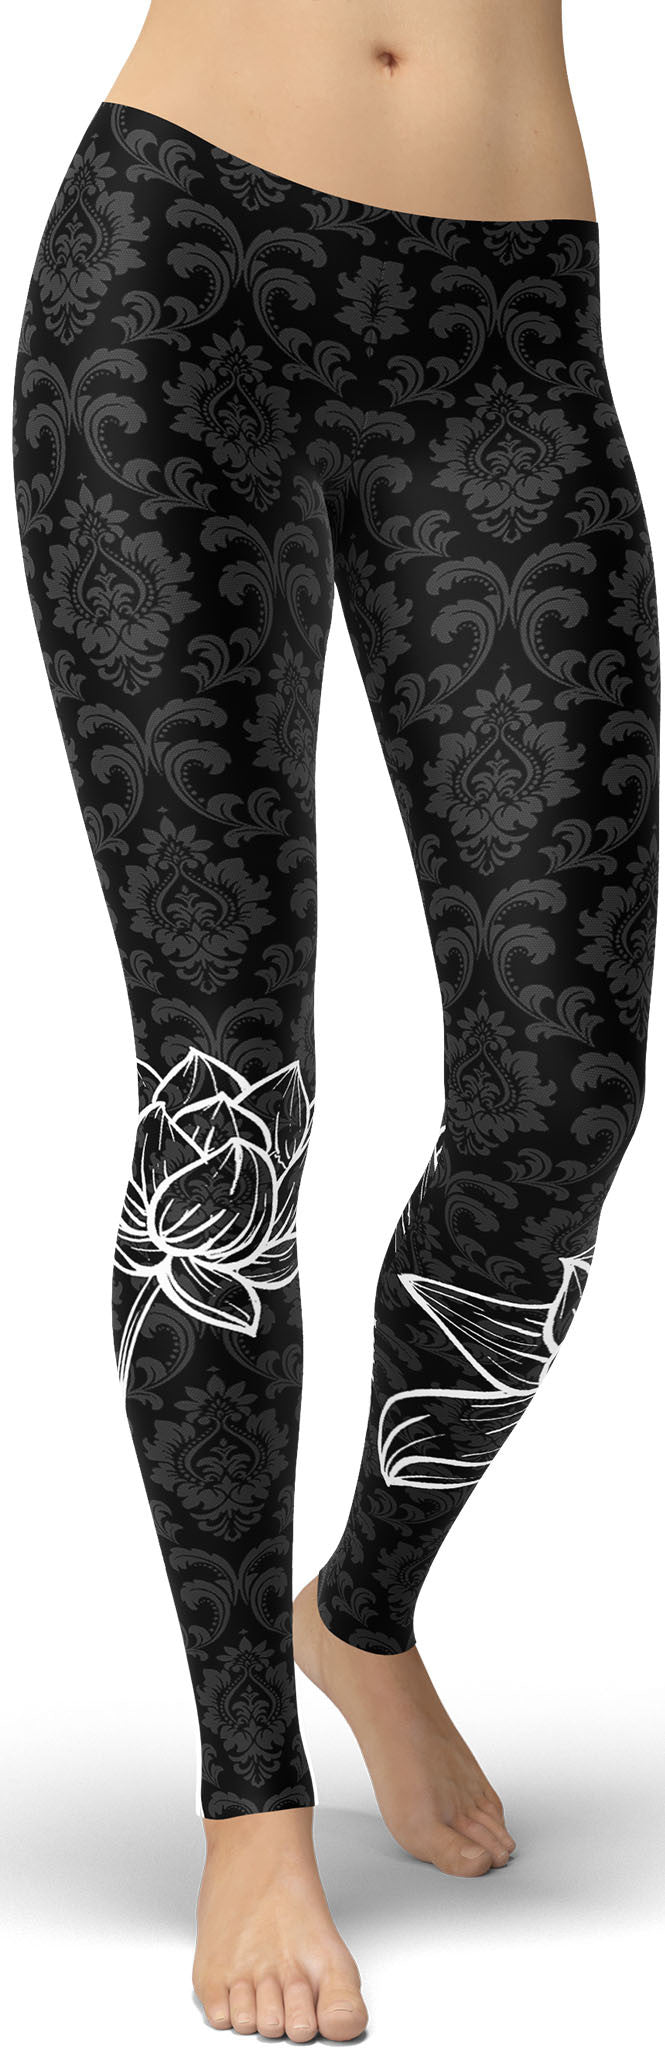 Lotus Leggings - Shop 🍂AUTUMN🍂 leggings SOLID BLACK ATHLETIC LEGGINGS